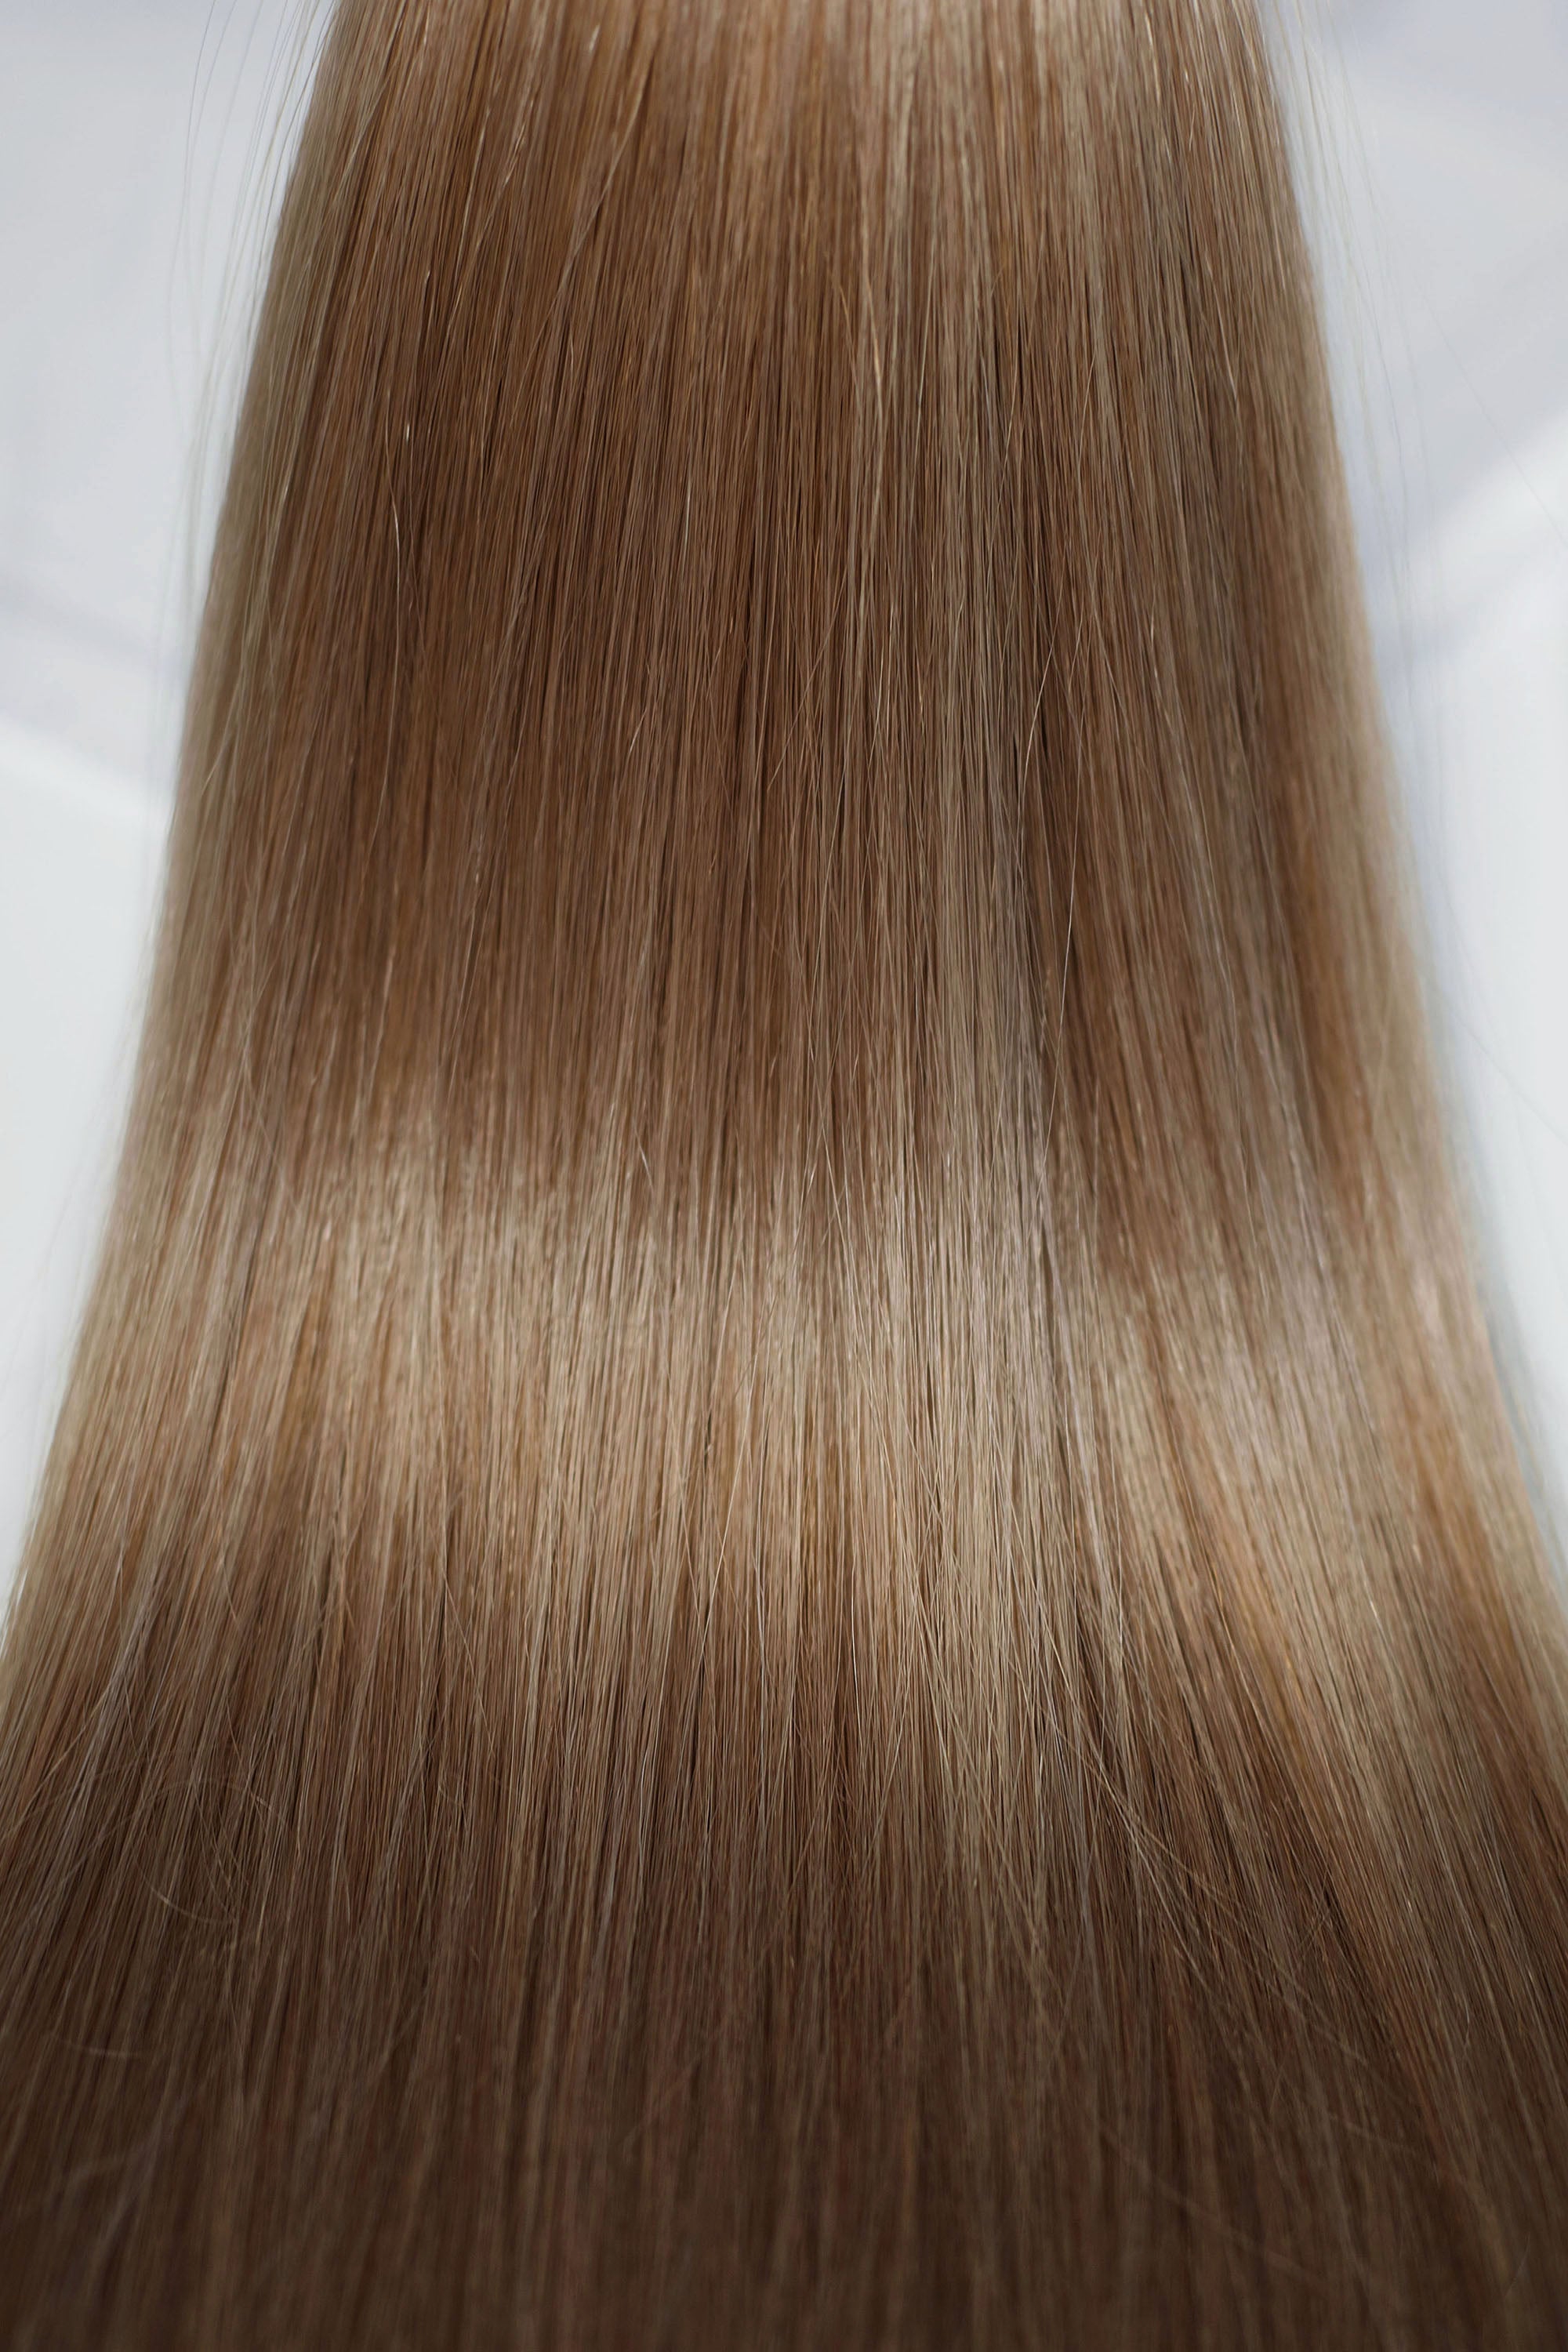 Behair professional Keratin Tip "Premium" 26" (65cm) Natural Straight Light Ash Brown #10 - 25g (Standart - 0.7g each pcs) hair extensions